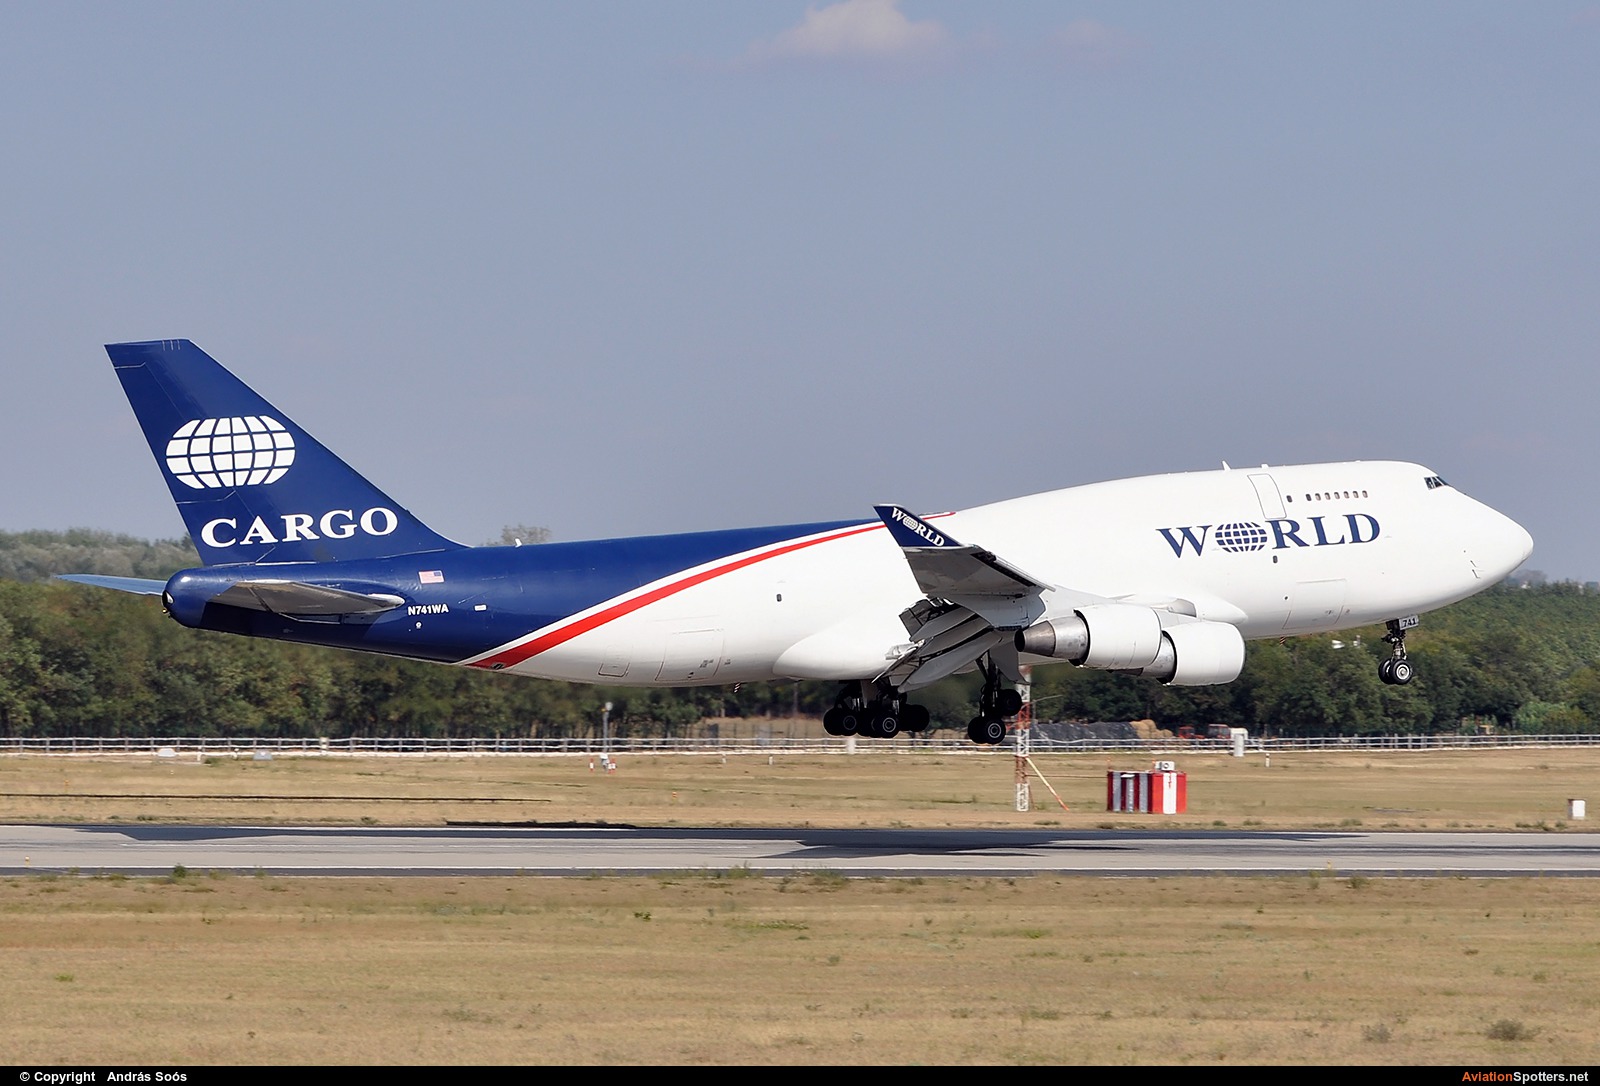 World Airways Cargo  -  747-400F  (N741WA) By András Soós (sas1965)